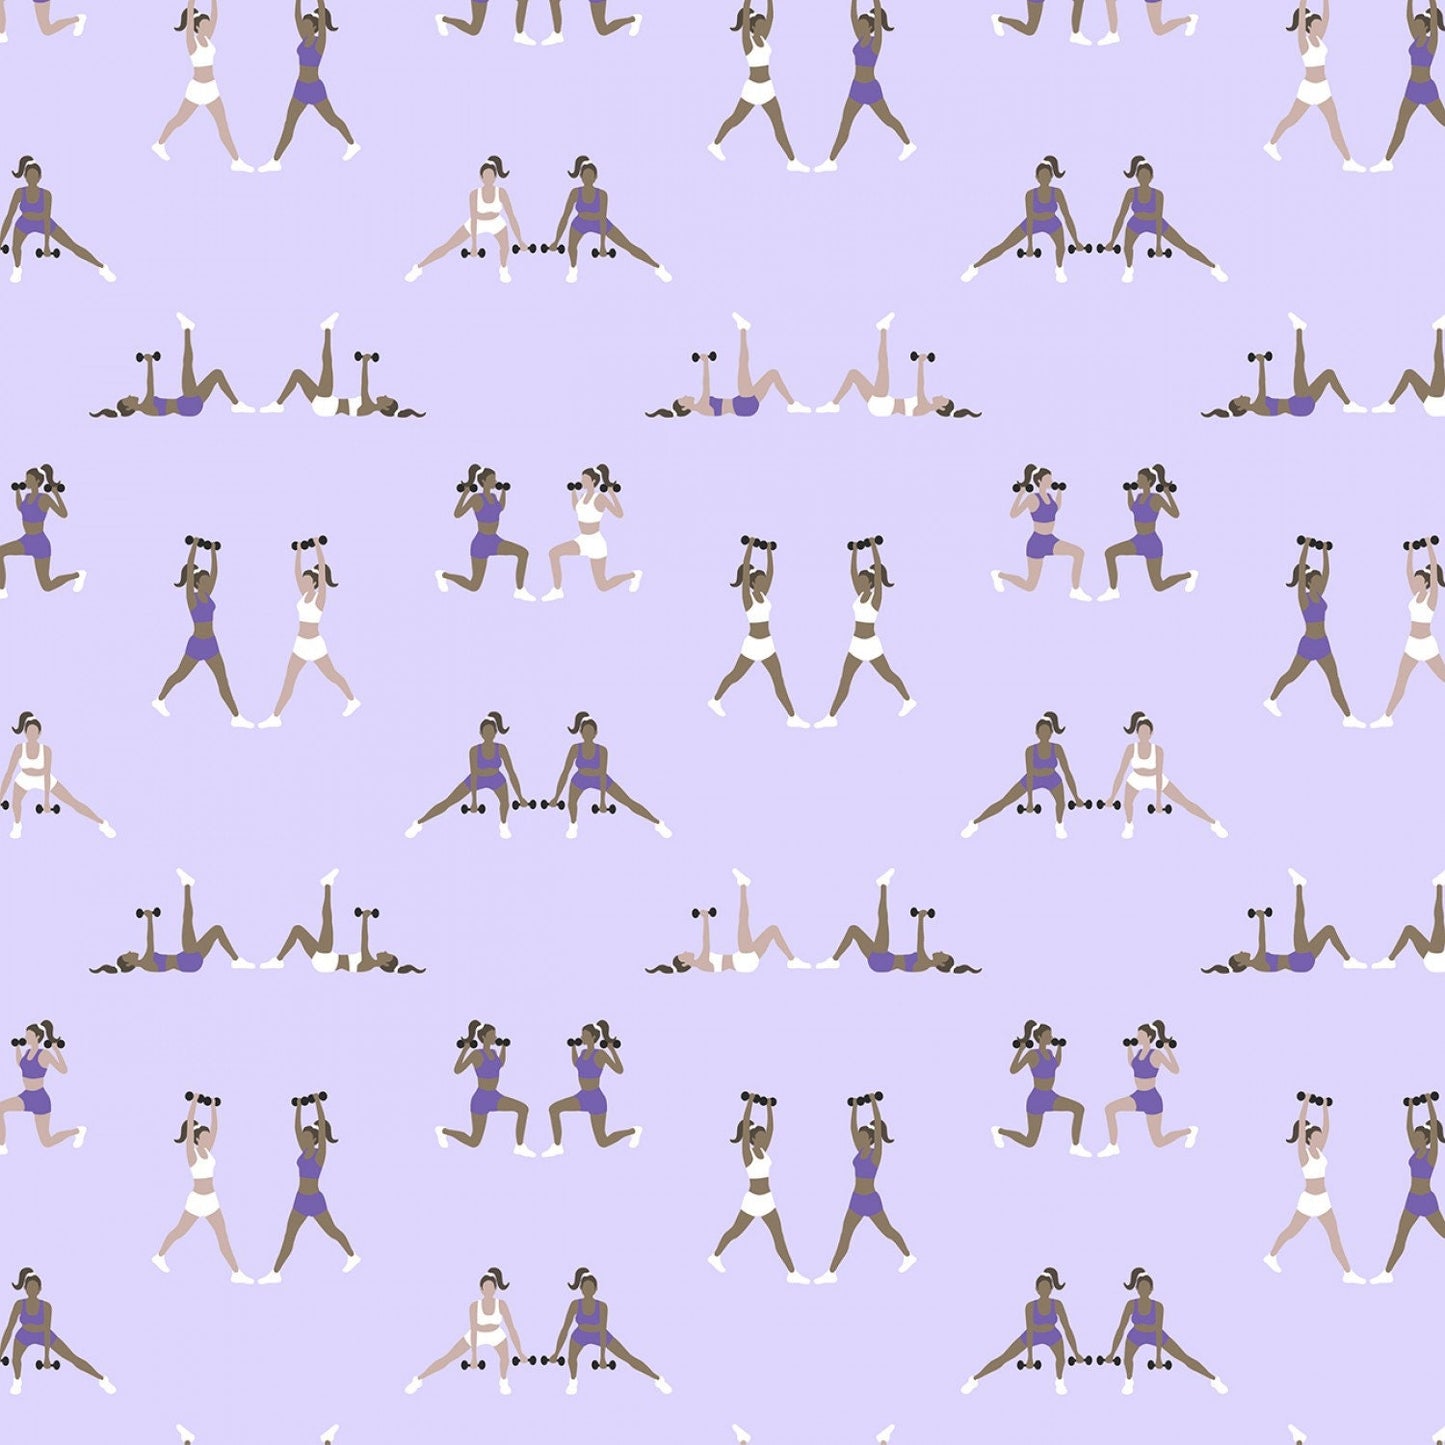 Health & Wellness Health and Wellness Workout Girls Lilac 51302-4 Cotton Woven Fabric